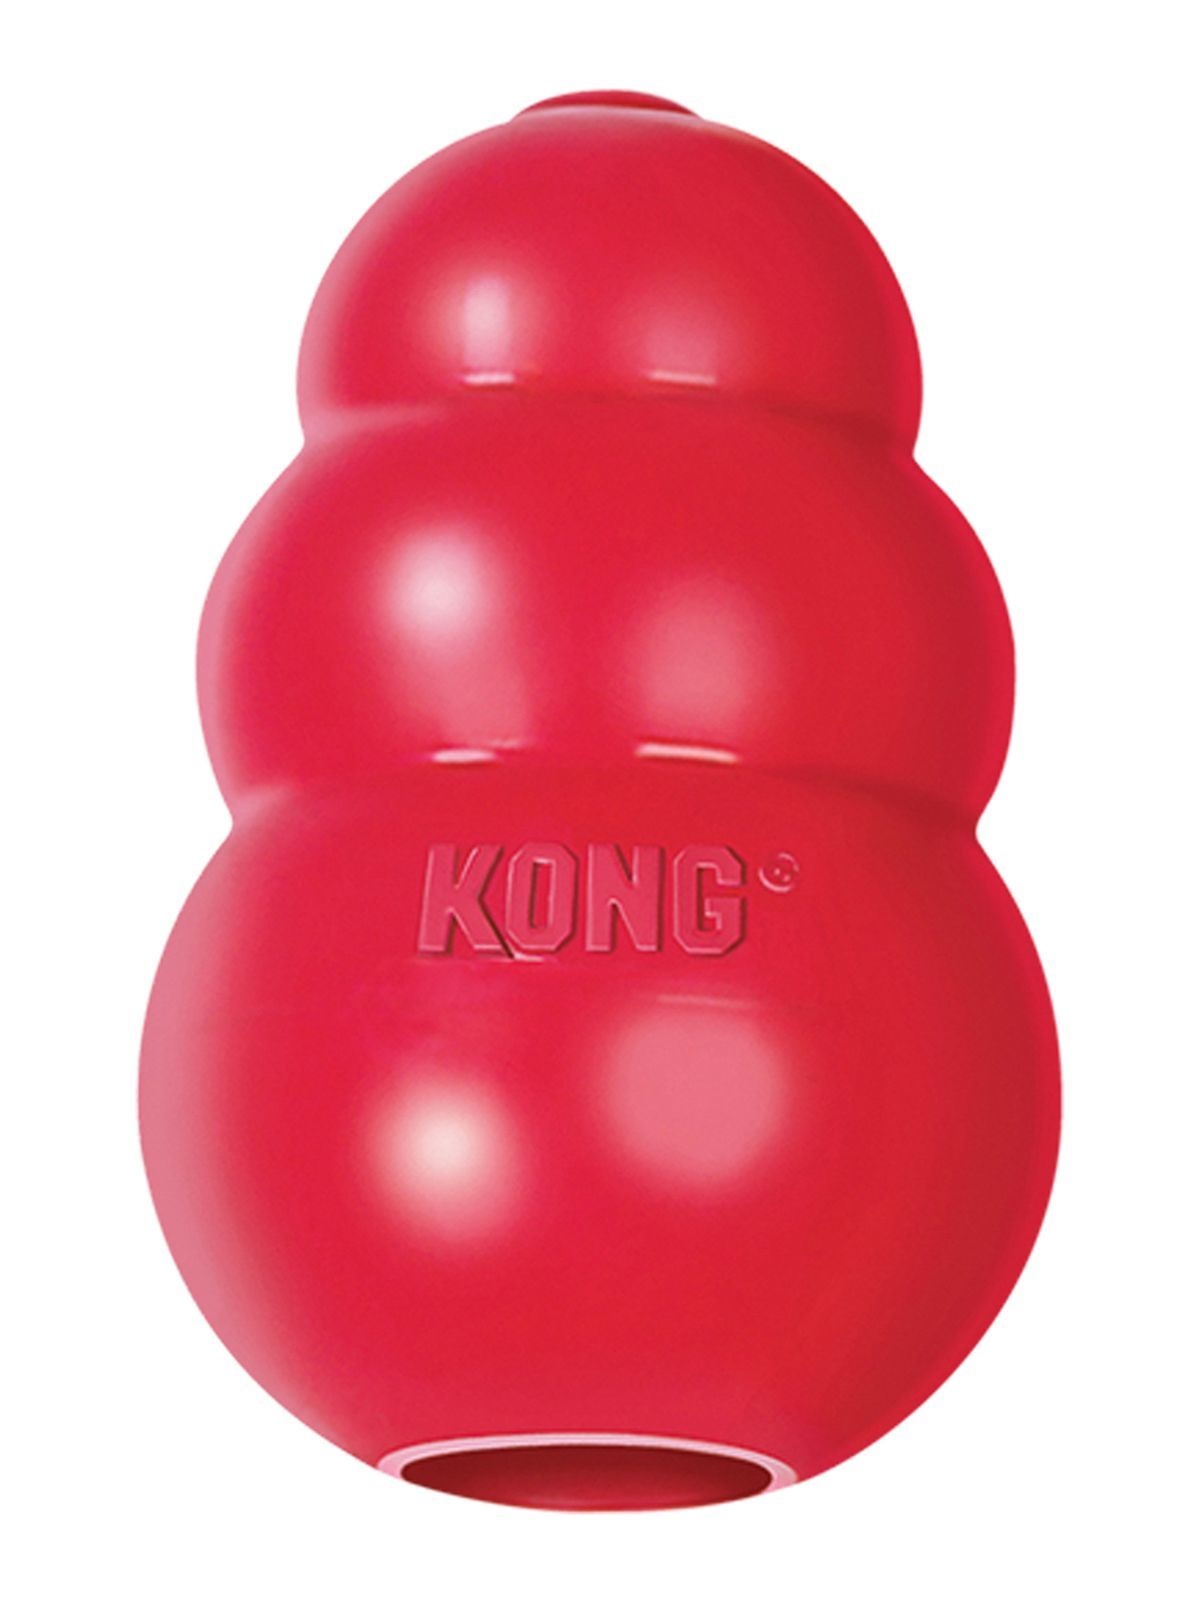 Игрушка для собак Kong classic р.s малая 7х4см